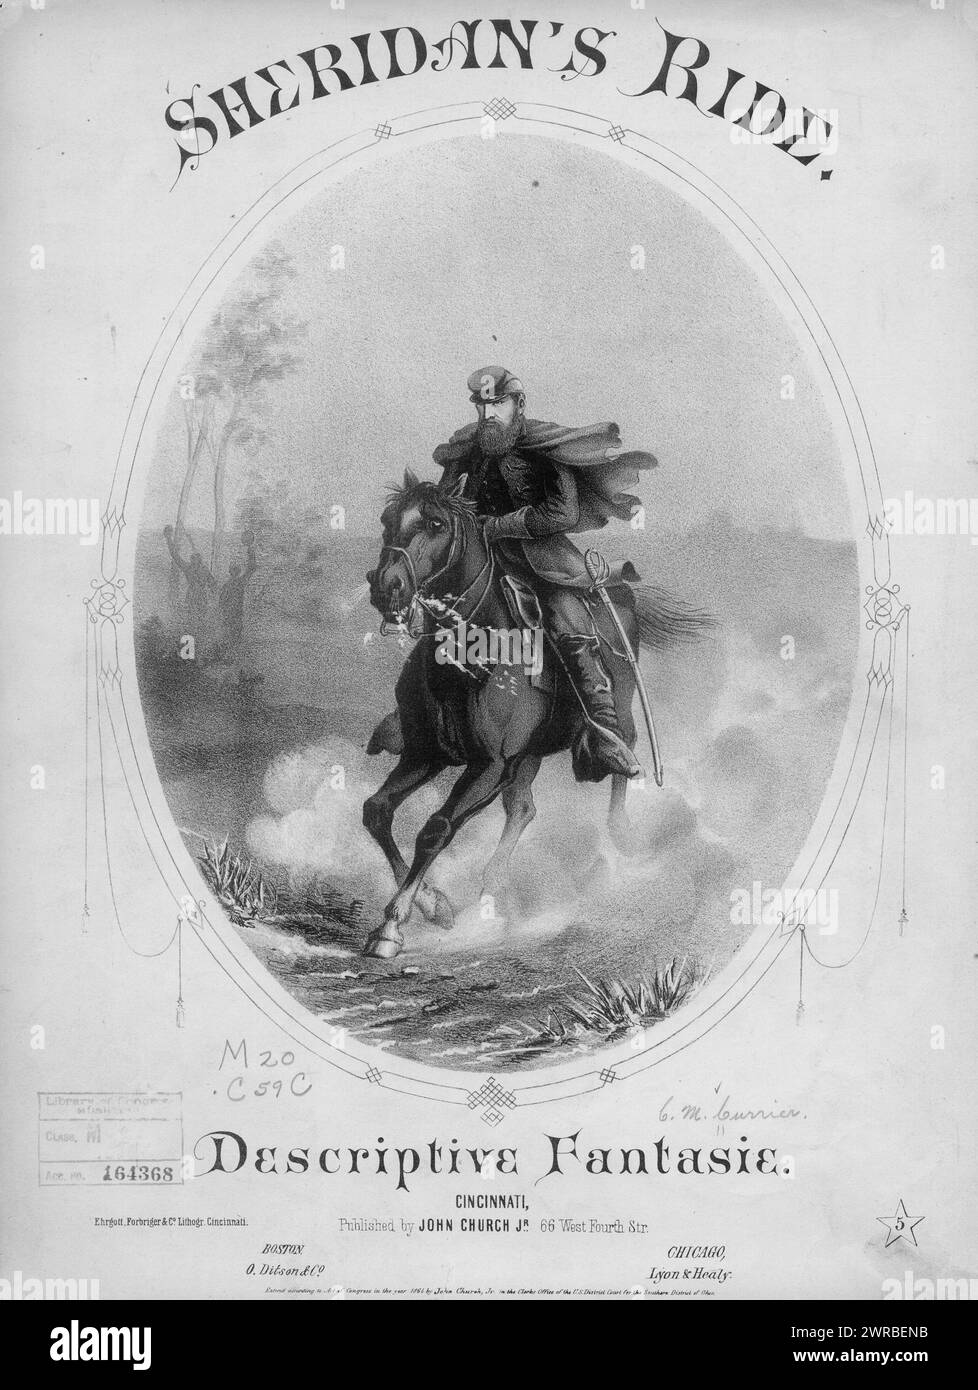 Sheridan's ride, Currier, C. M. (arranger), John Church Jr., Cincinnati, 1864., United States, History, Civil War, 1861-1865, Songs and music Stock Photo